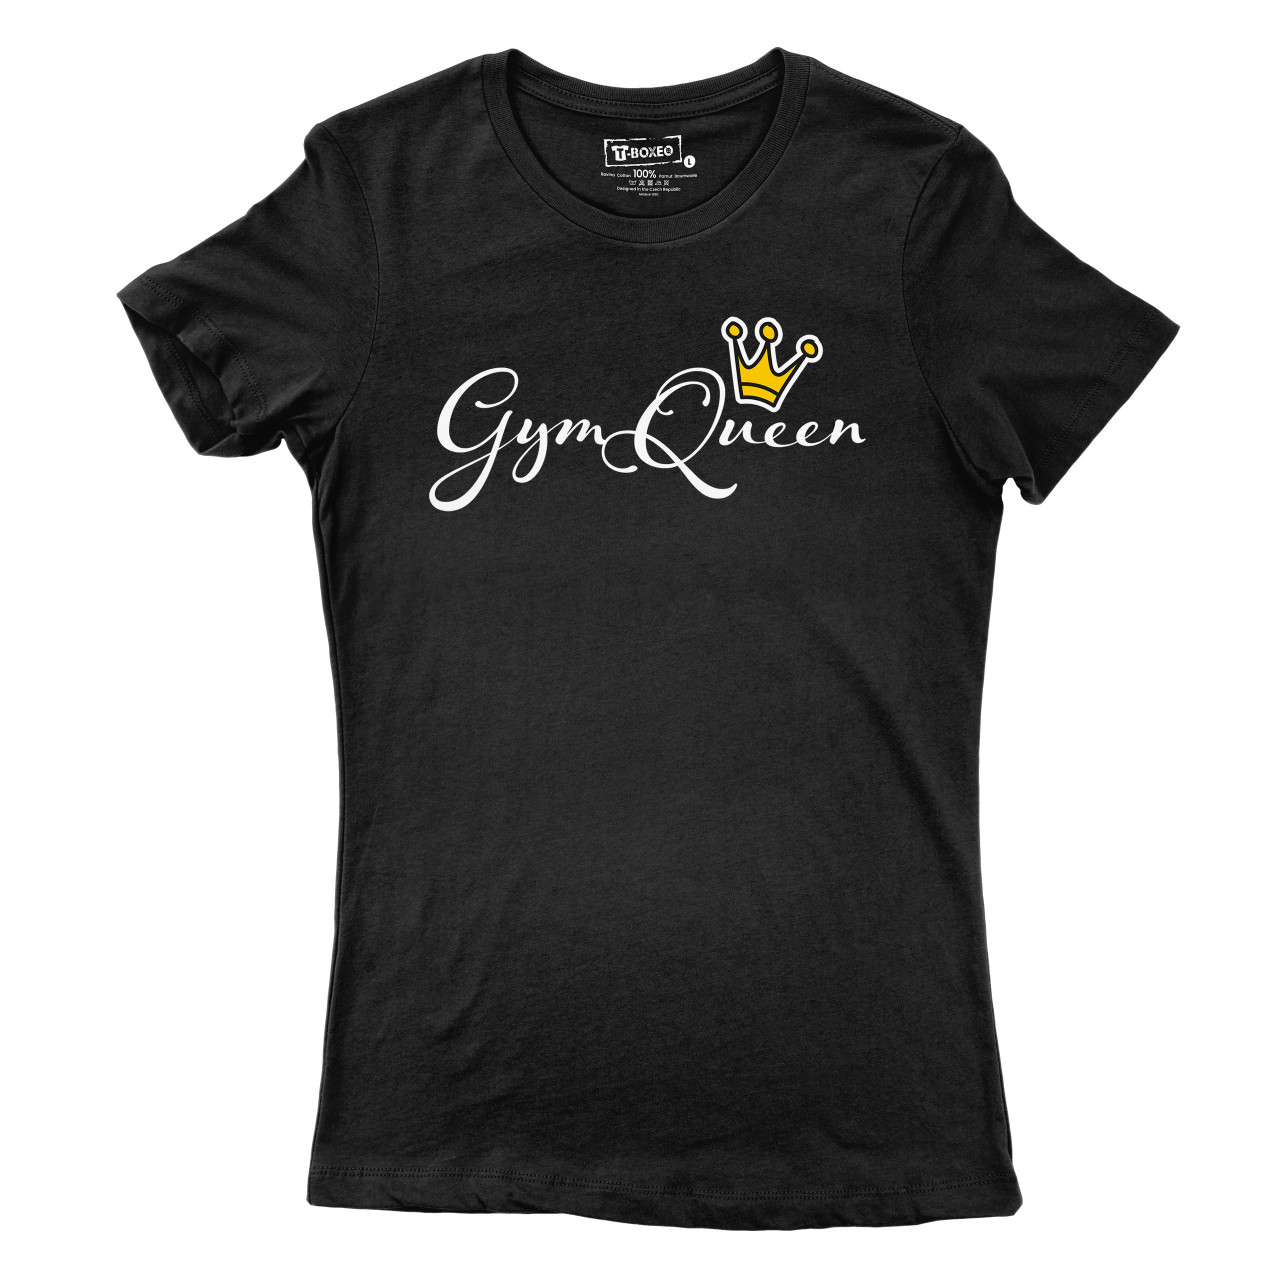 Dámské tričko s potiskem “Gym Queen”